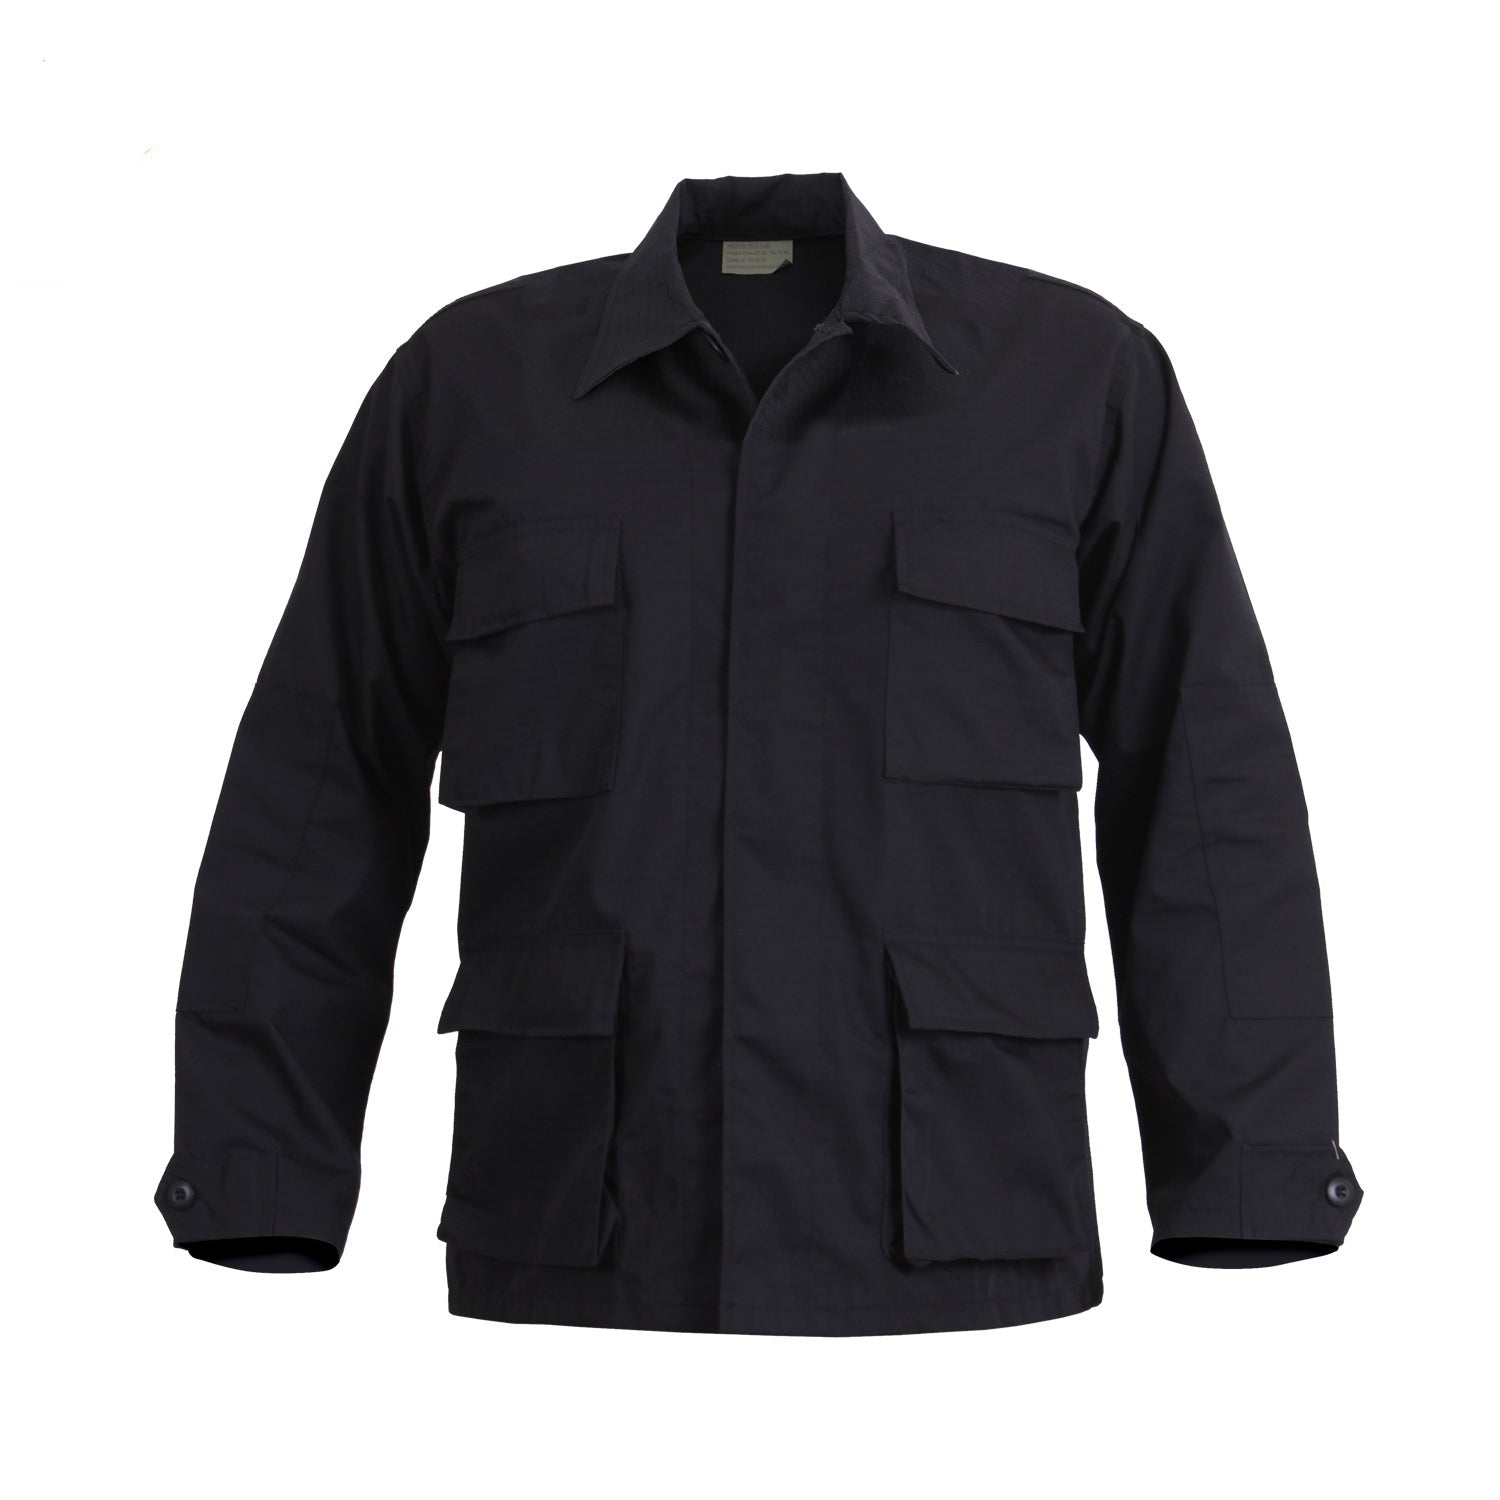 [SWAT] Poly/Cotton Rip-Stop Tactical BDU Shirts Black